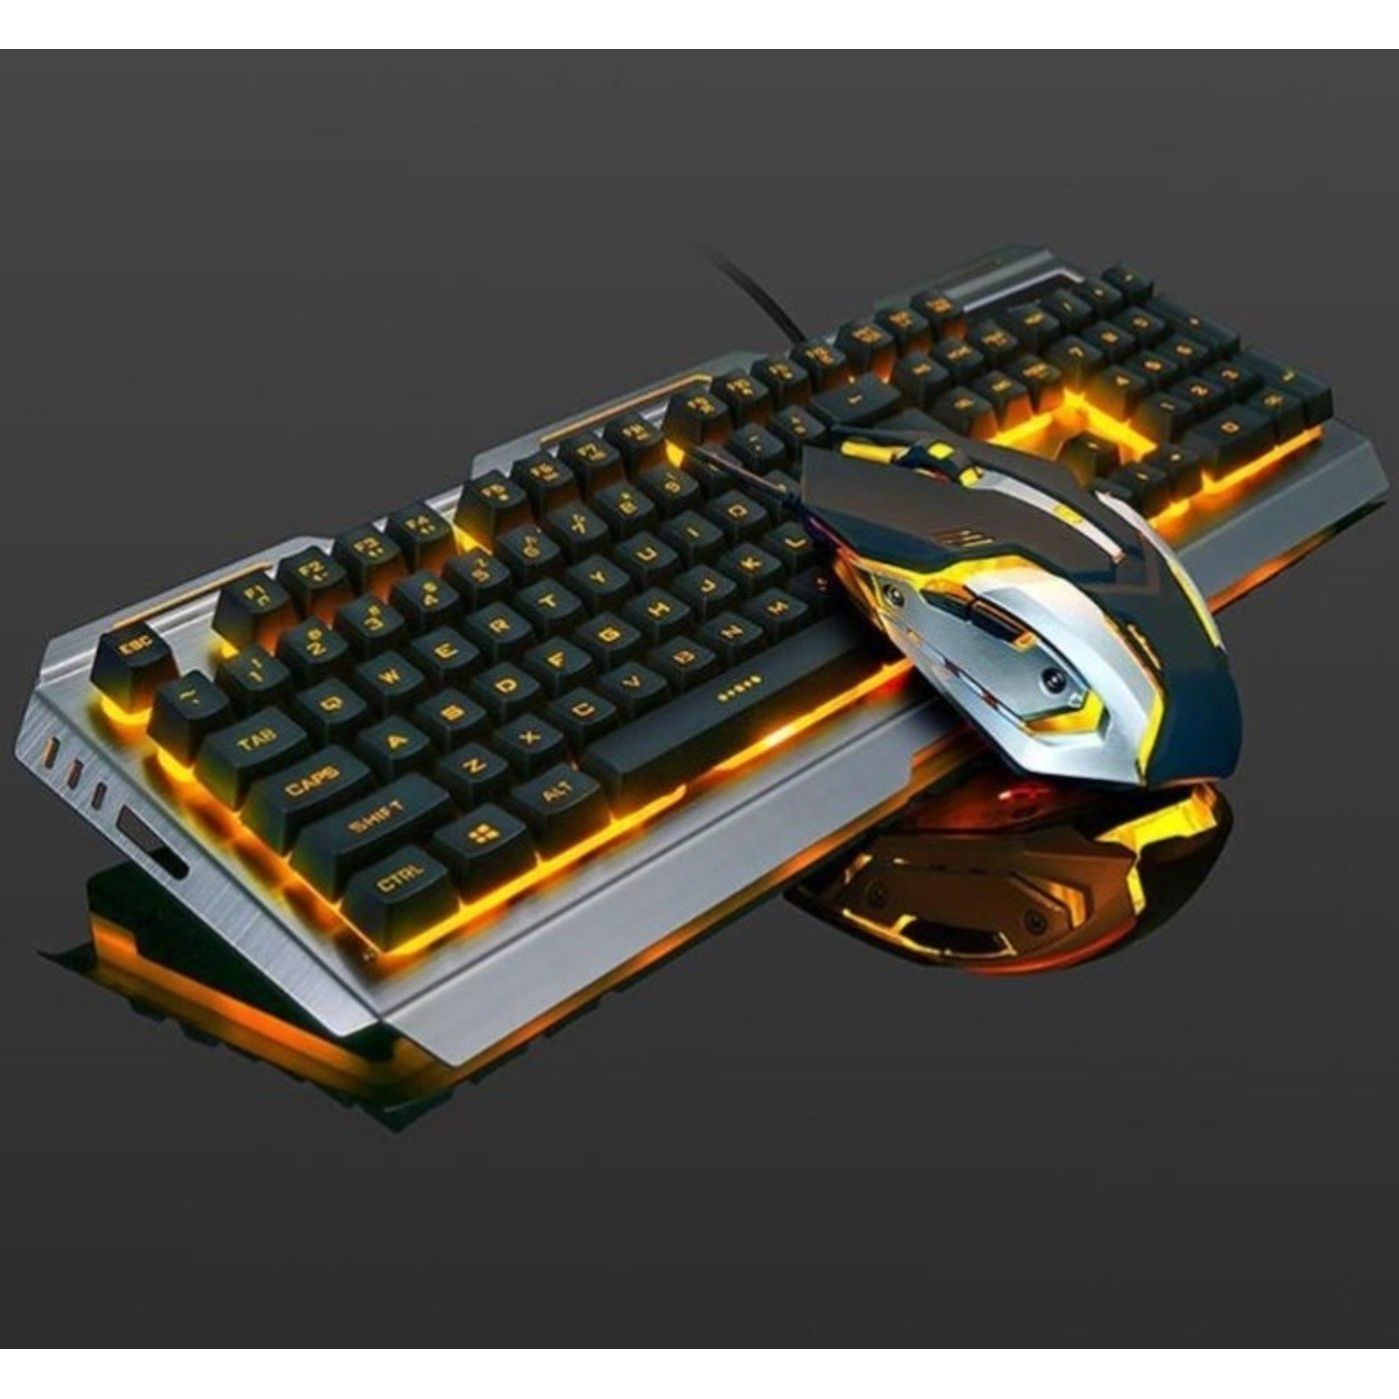 Ninja Dragons Tungsten Gold Metal Frame Gaming Keyboard and Mouse Set